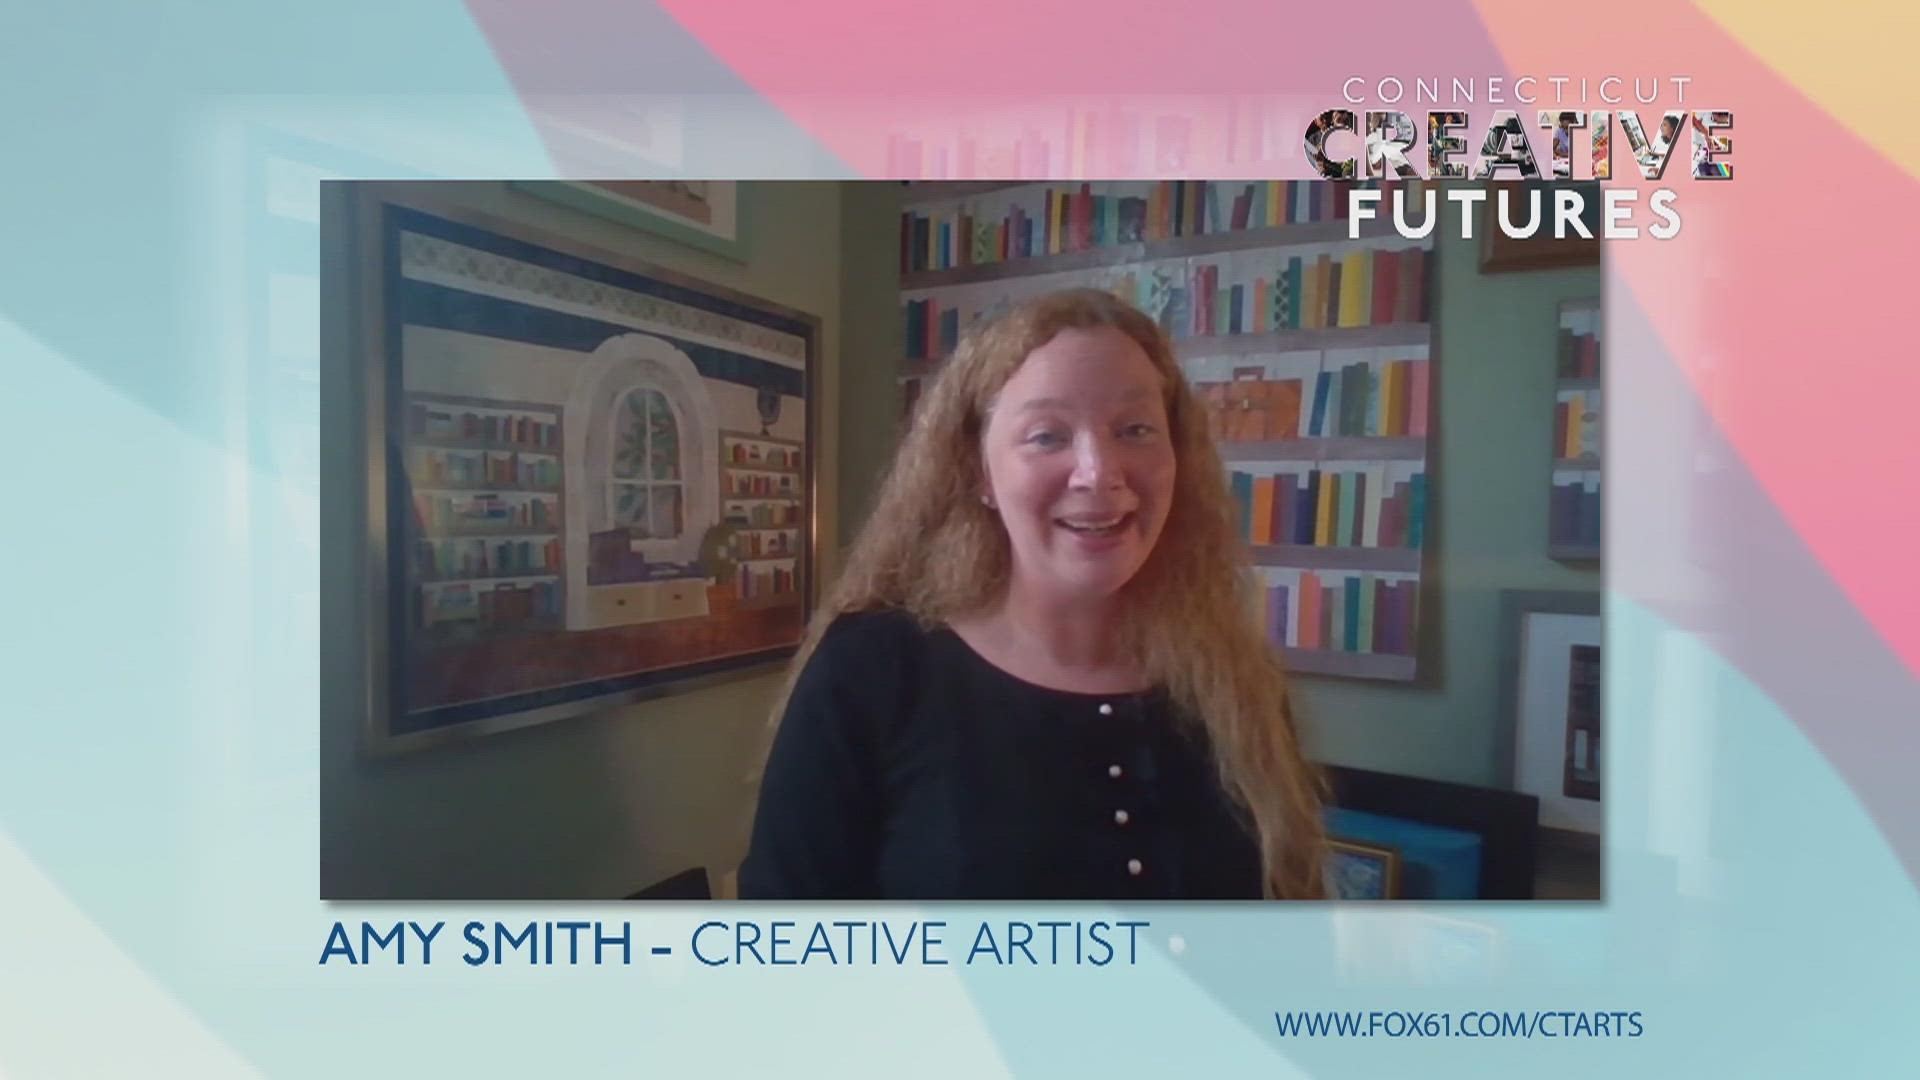 Meet CT Creative Futures Artist, Amy Smith